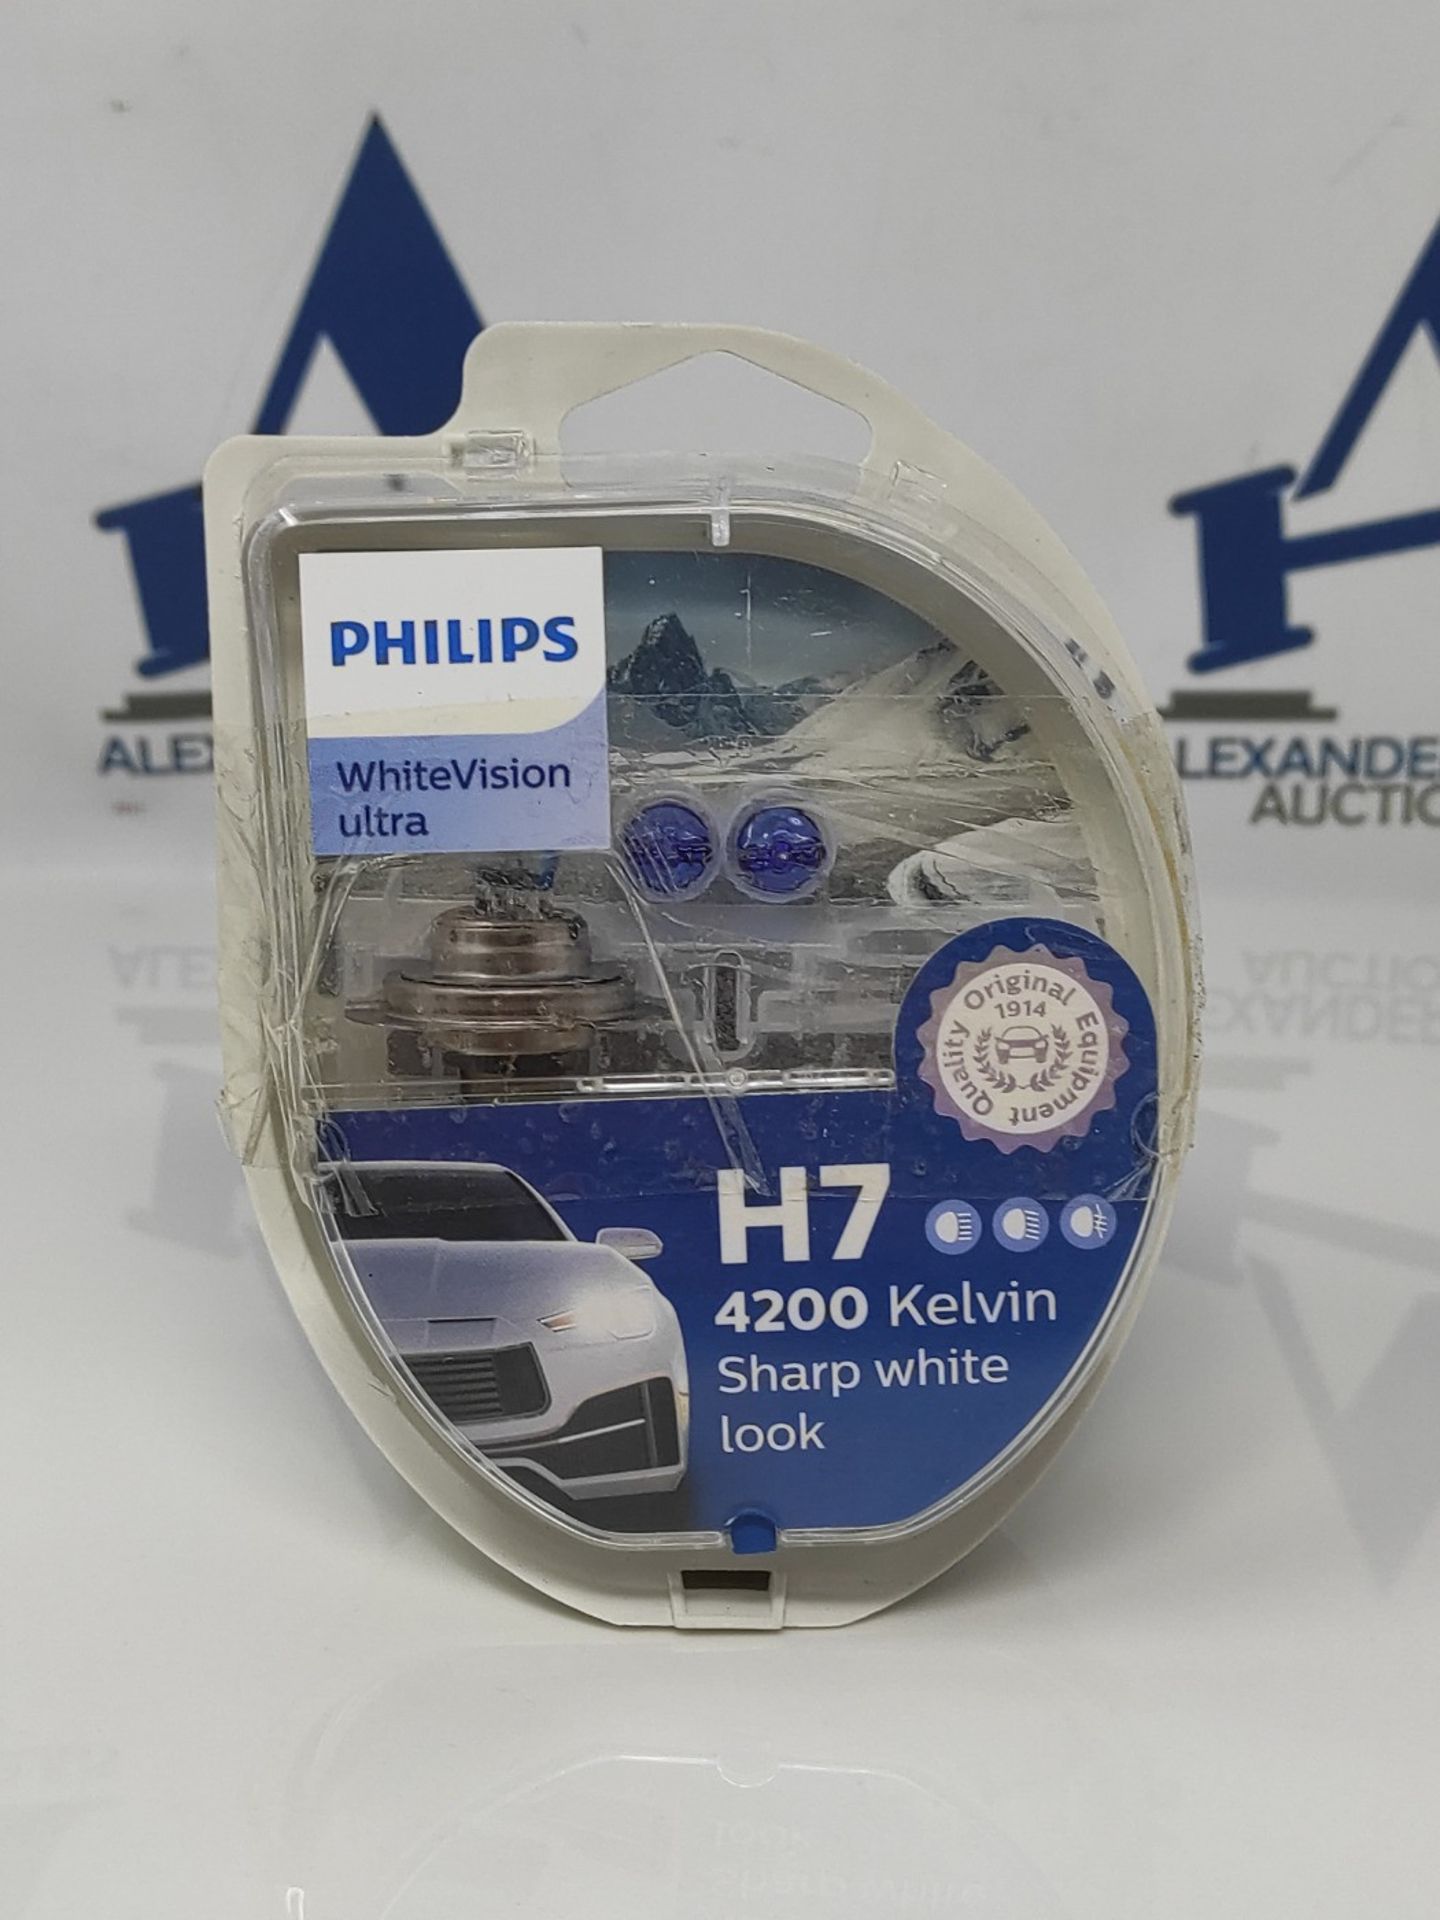 Philips WhiteVision ultra H7 car headlight bulb, 4.200K, set of 2 - Image 2 of 3